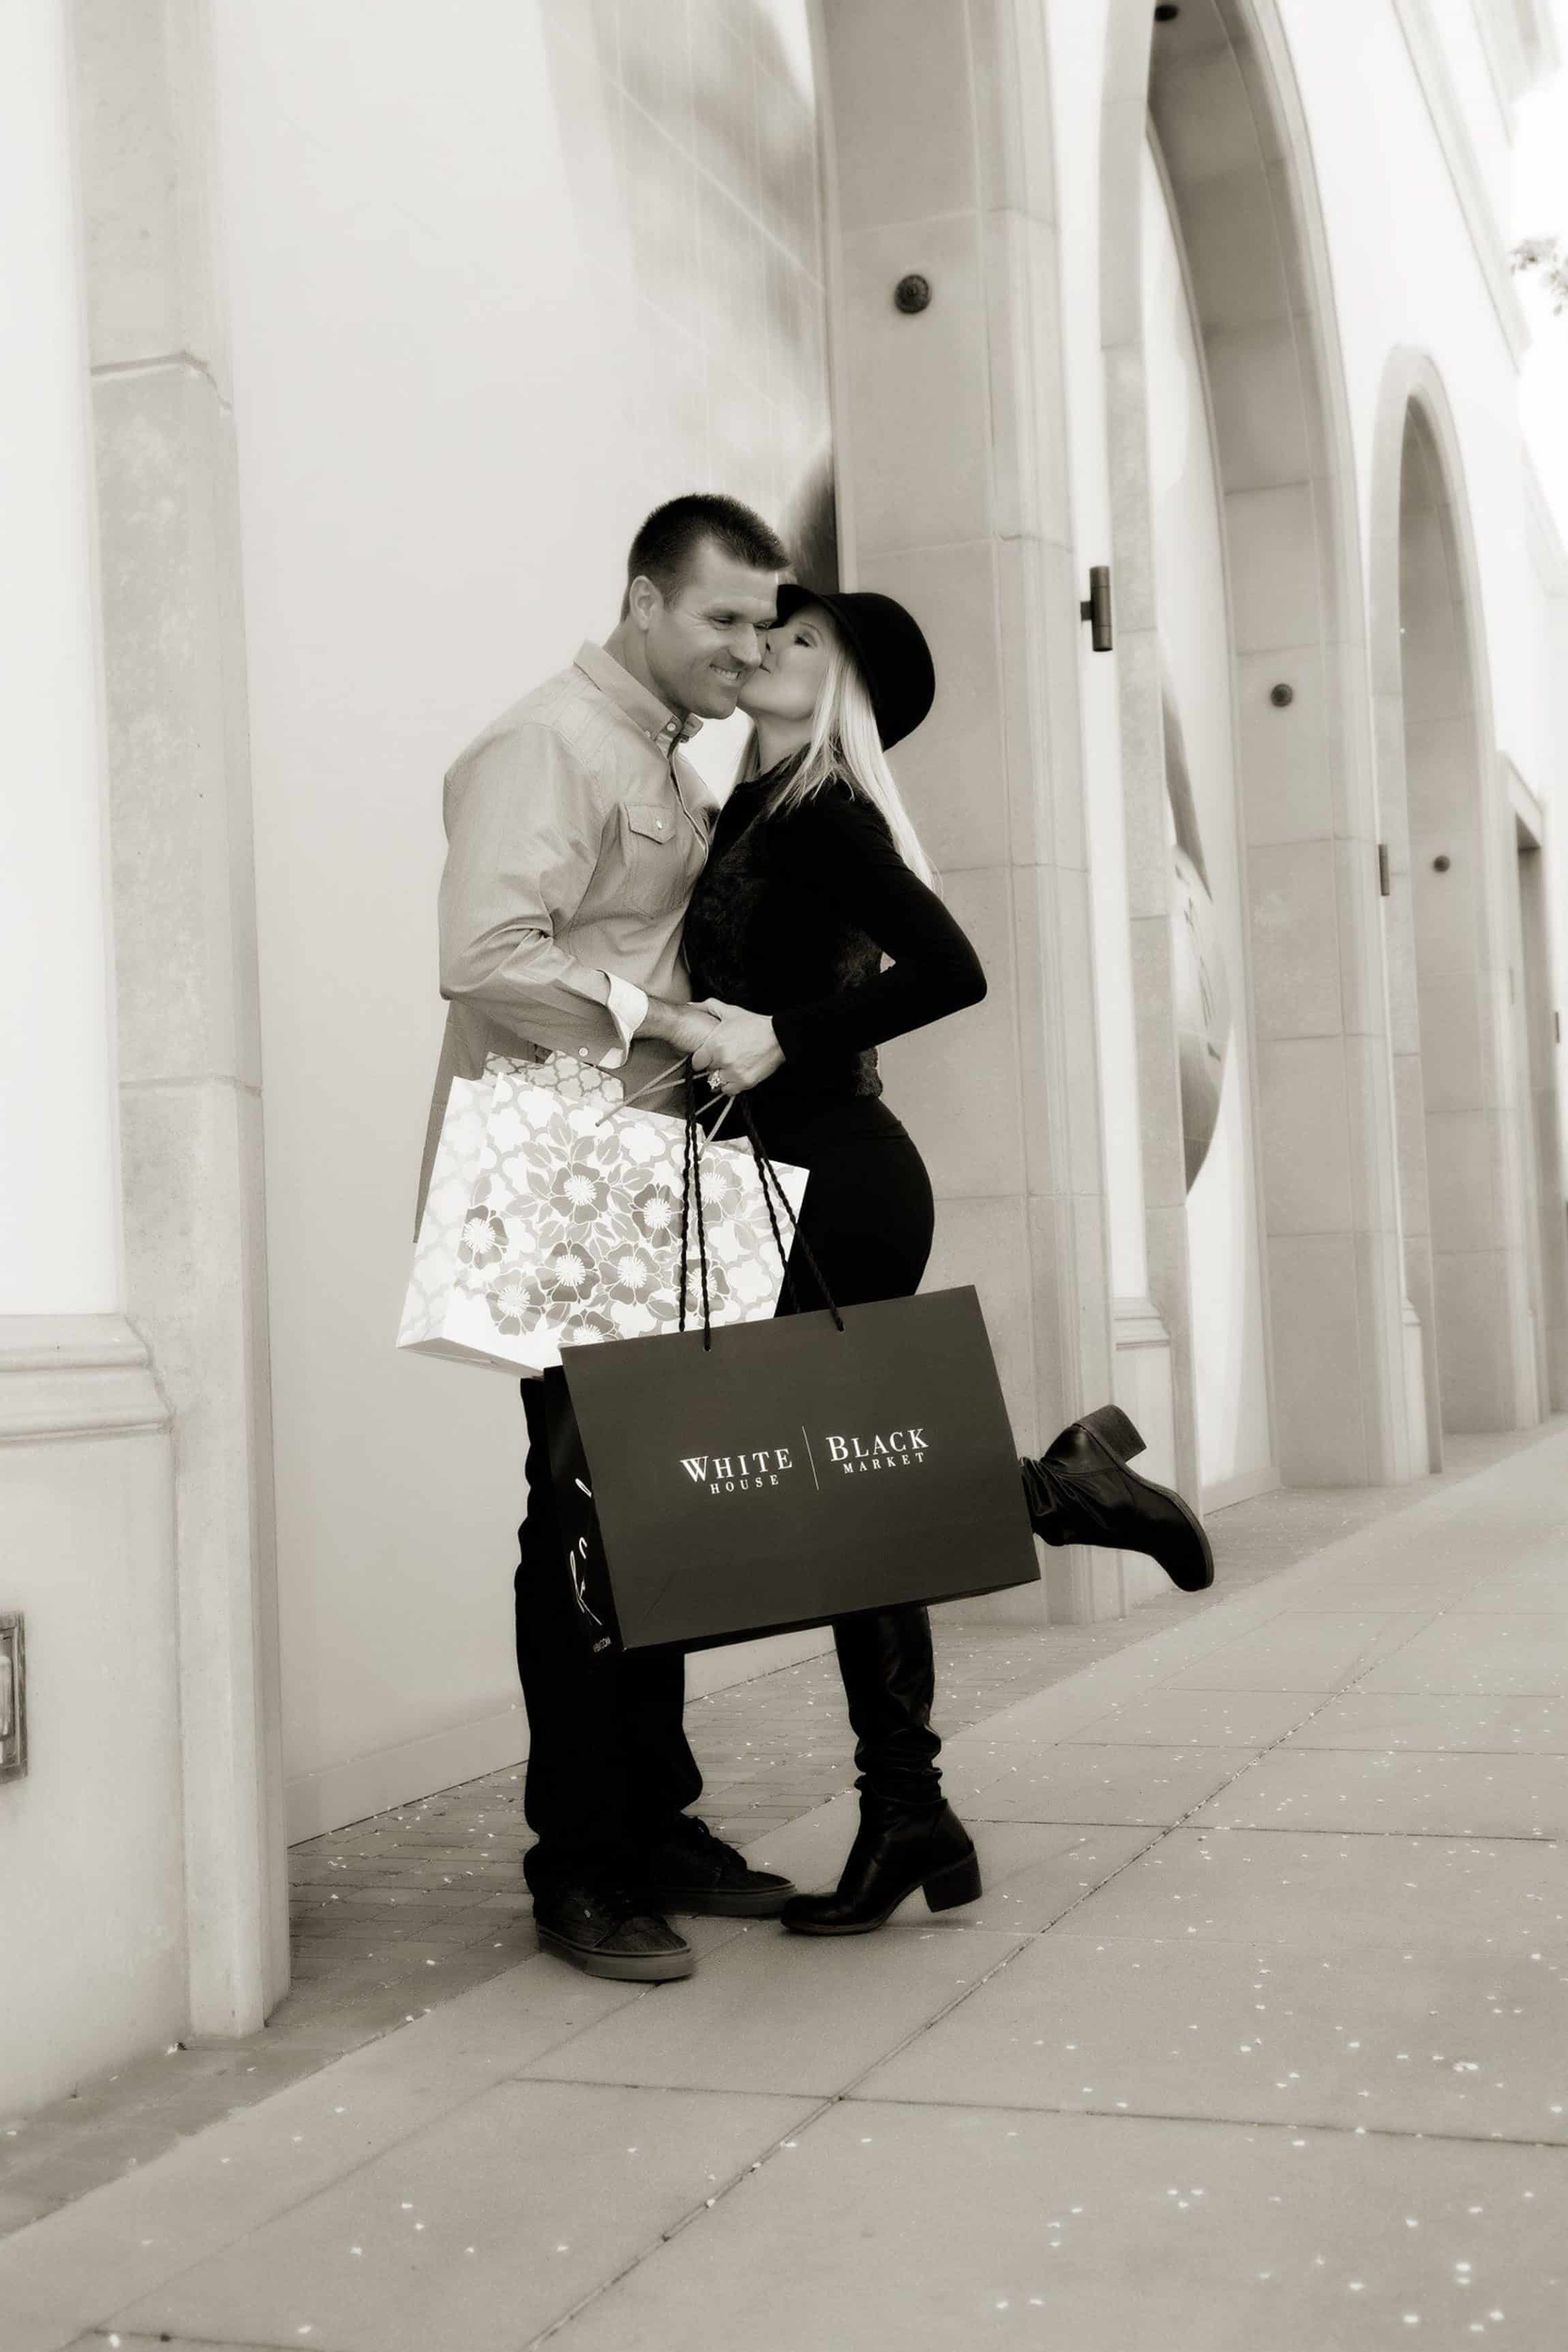 Woman holding a shopping bag kissing a man on the cheek.